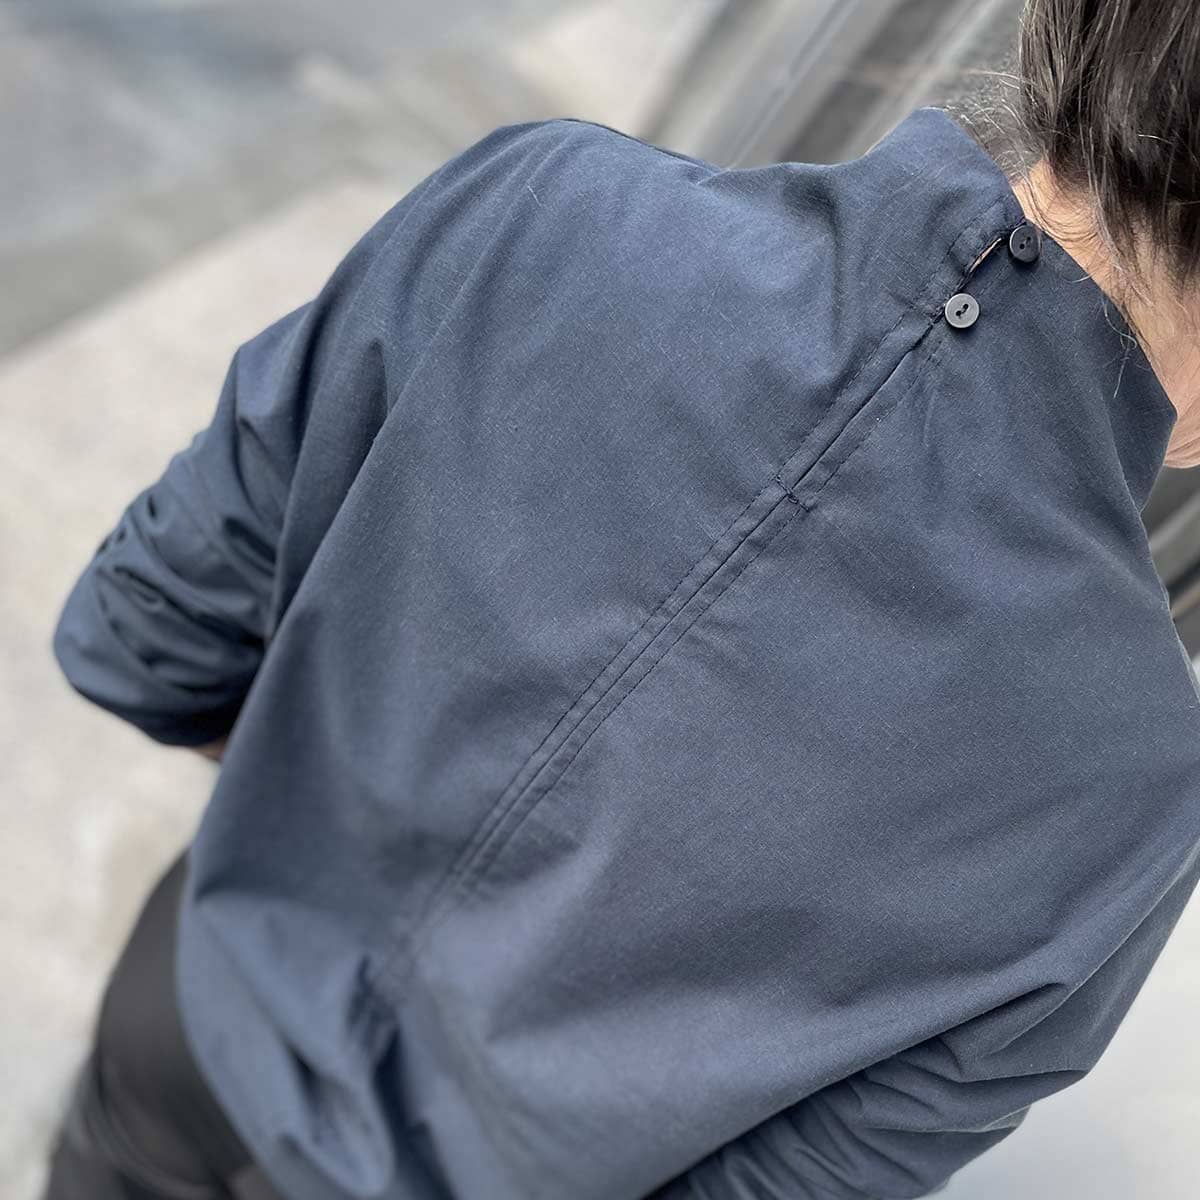 long mirage Japanese top /  חולצה יפנית ארוכה כחול מיראז' - studio oh design